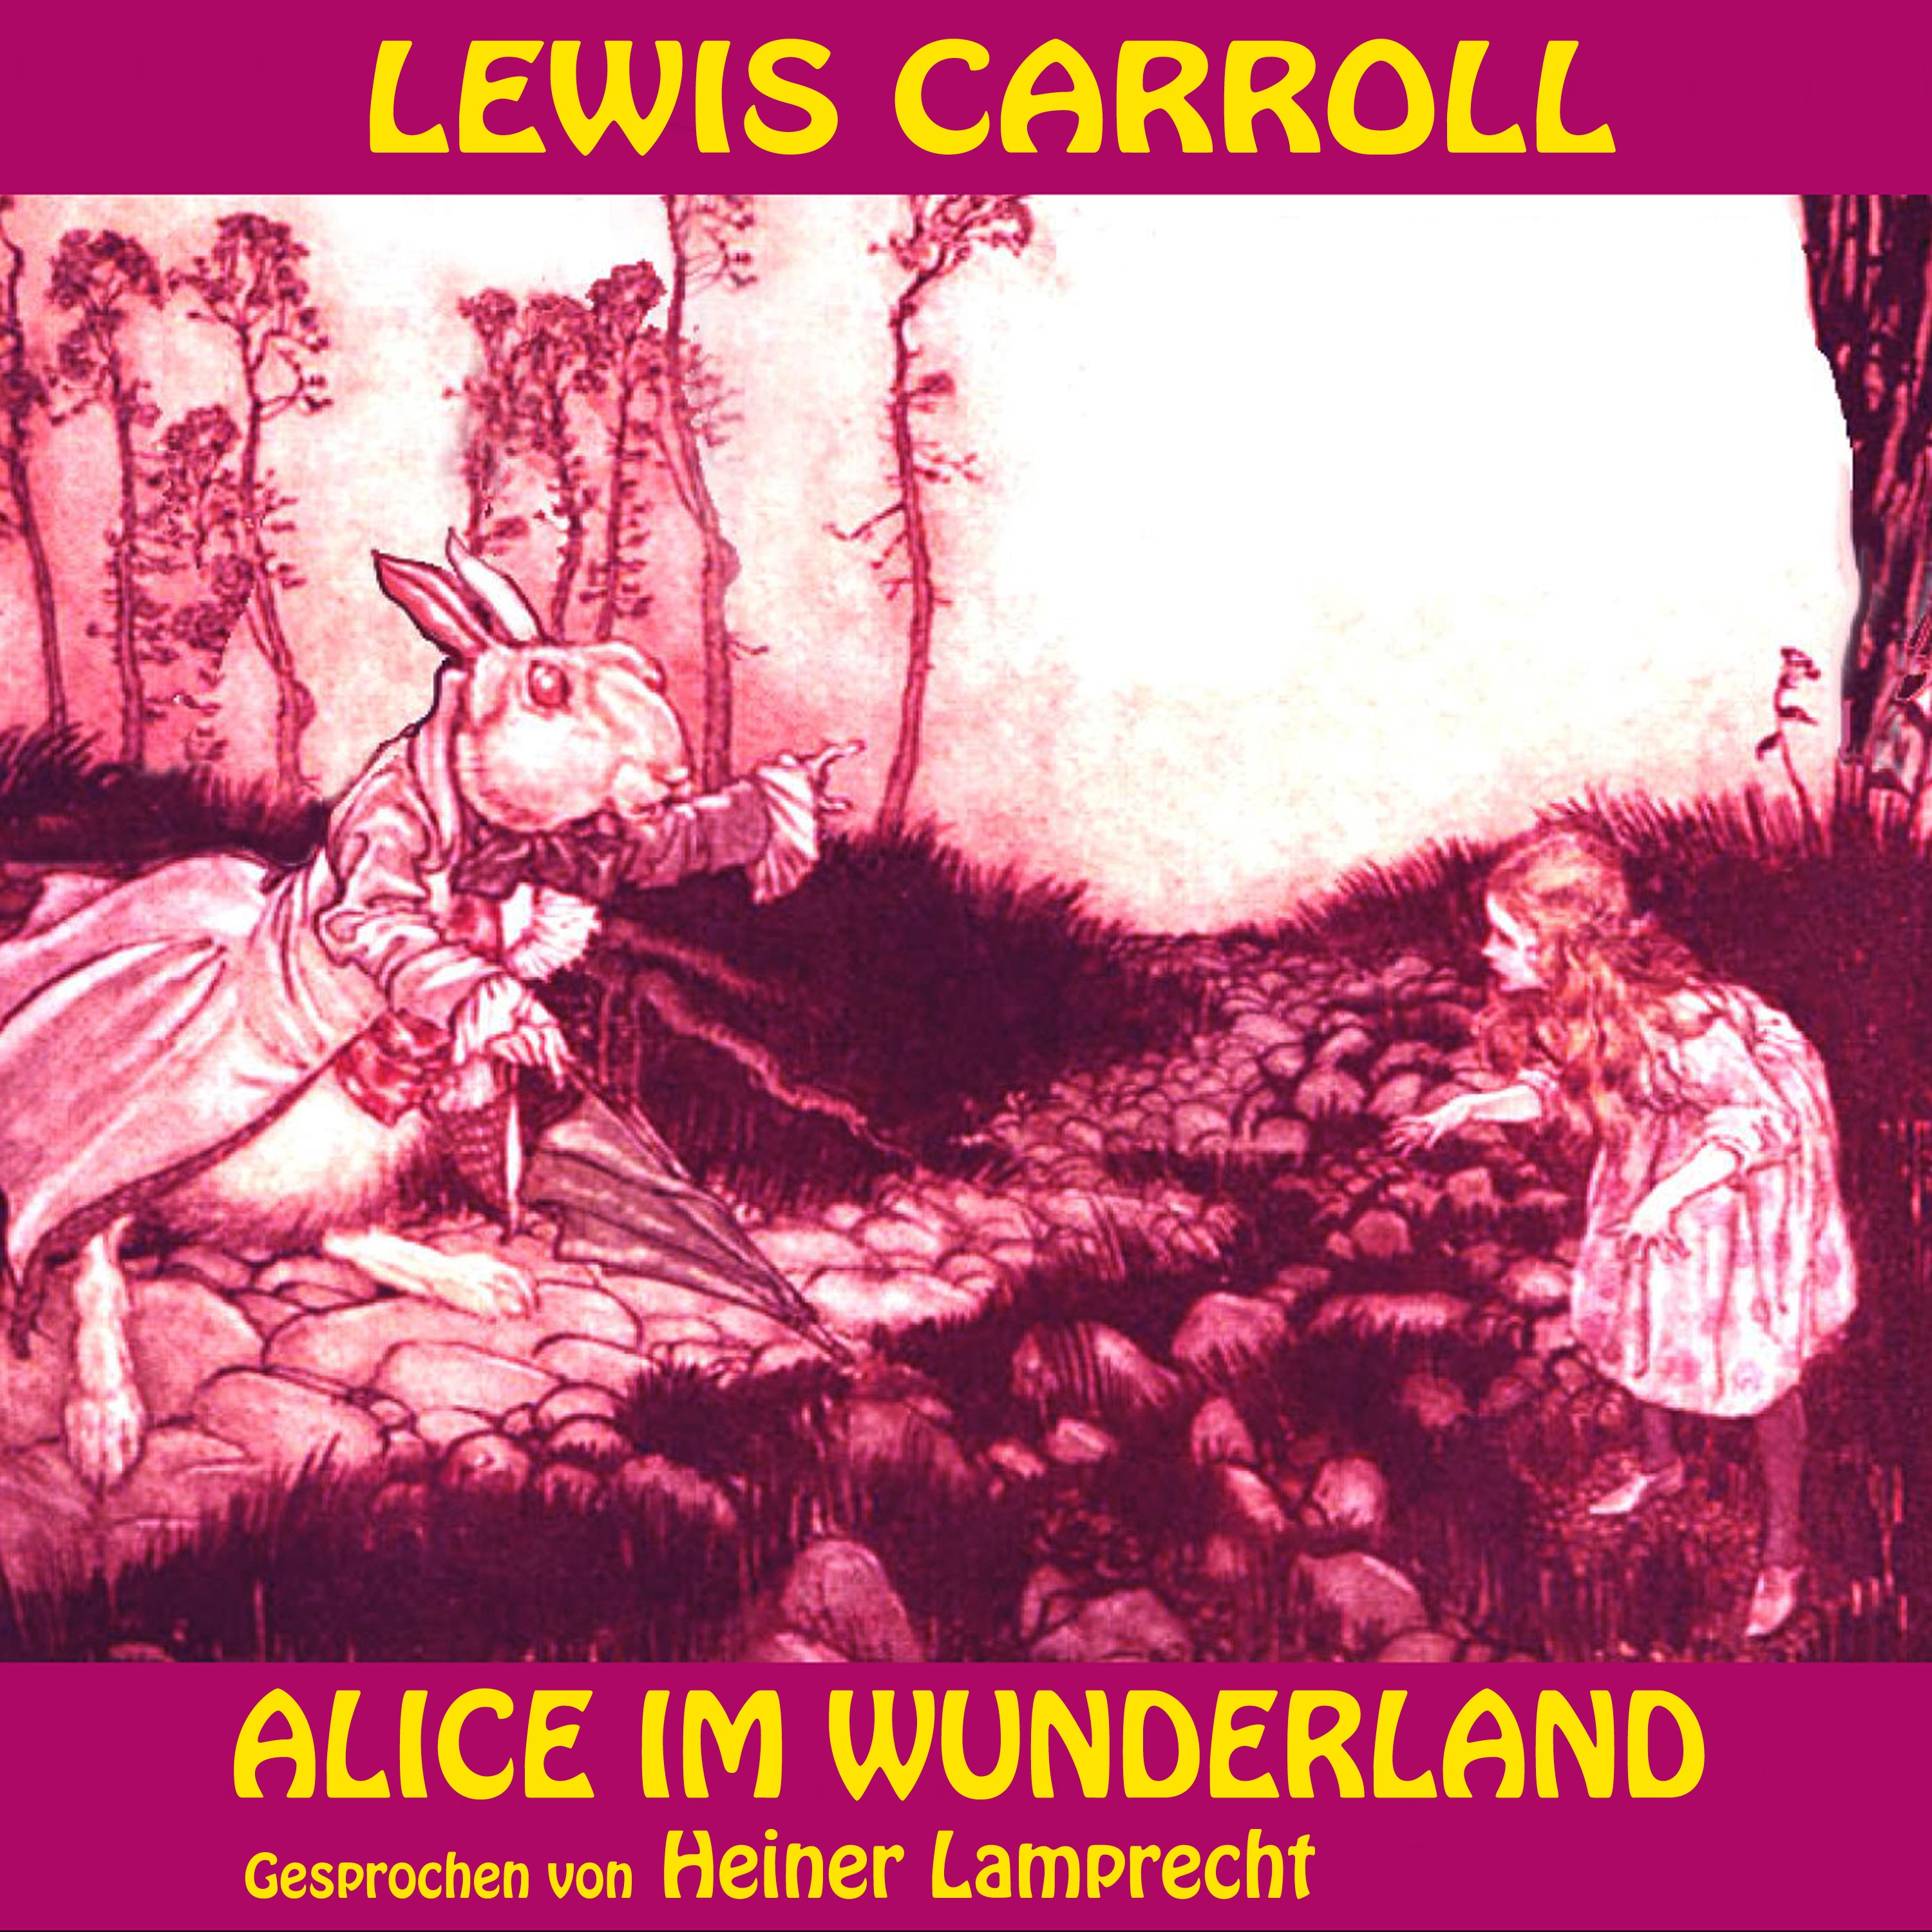 Kapitel 9: Alice im Wunderland (Teil 20)